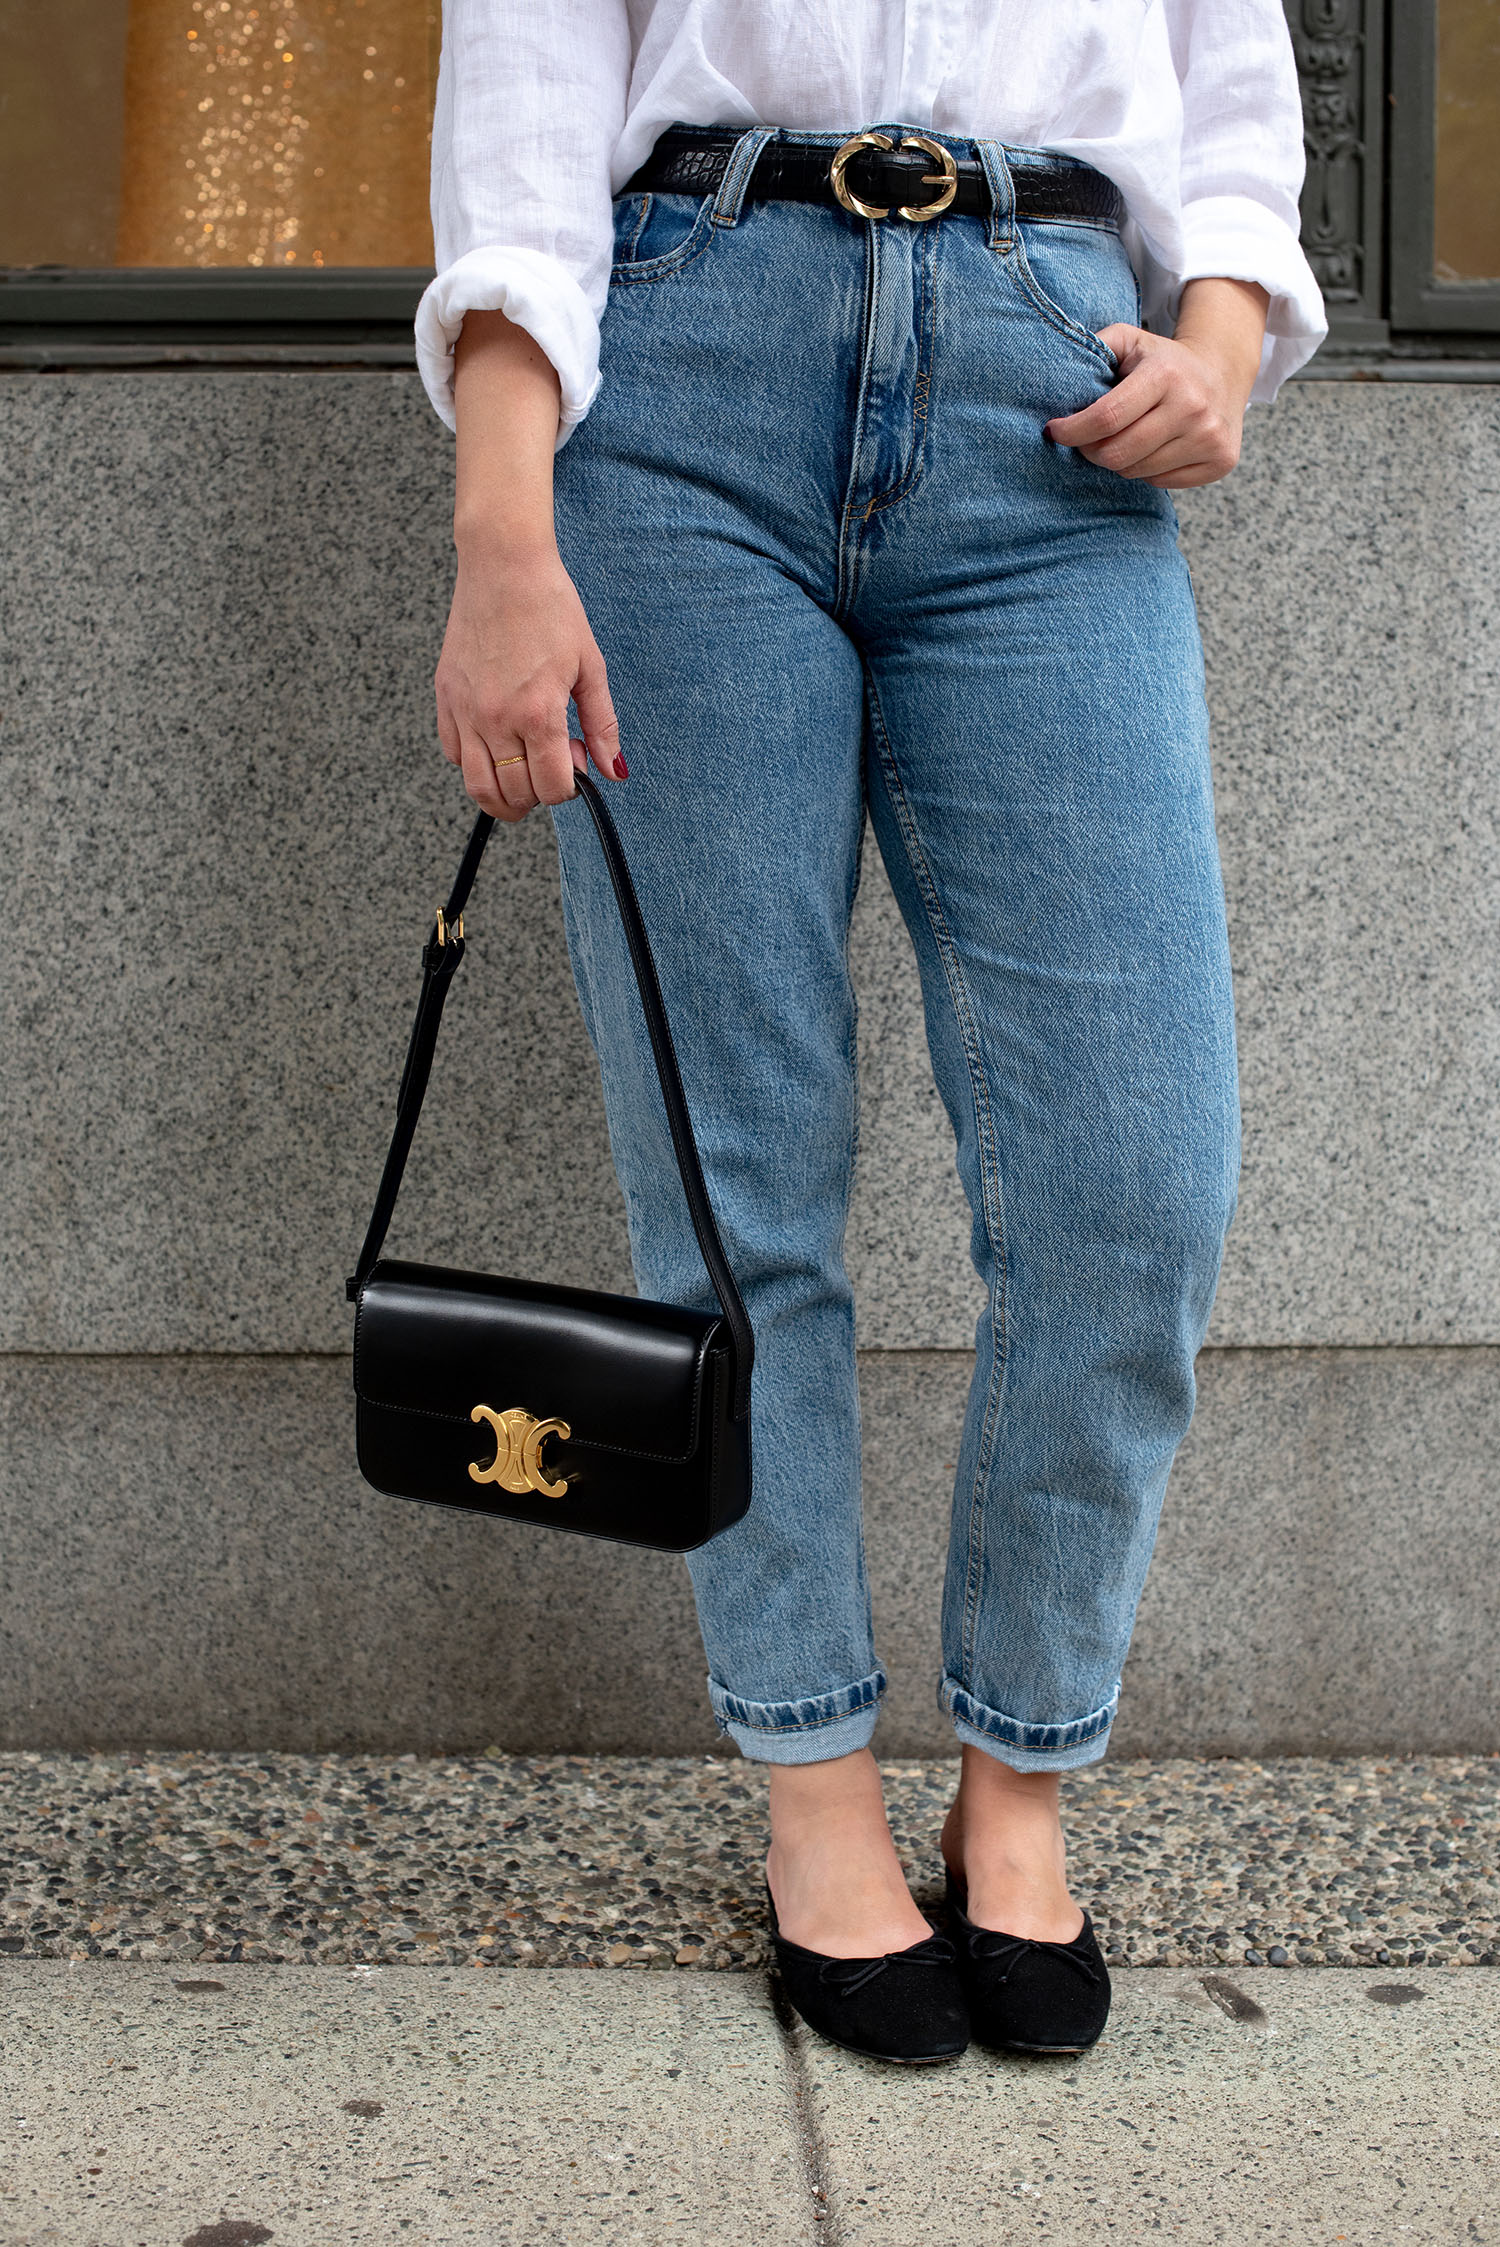 Coco & Vera - Celine Triomphe handbag, Zara mom jeans, Flattered mules